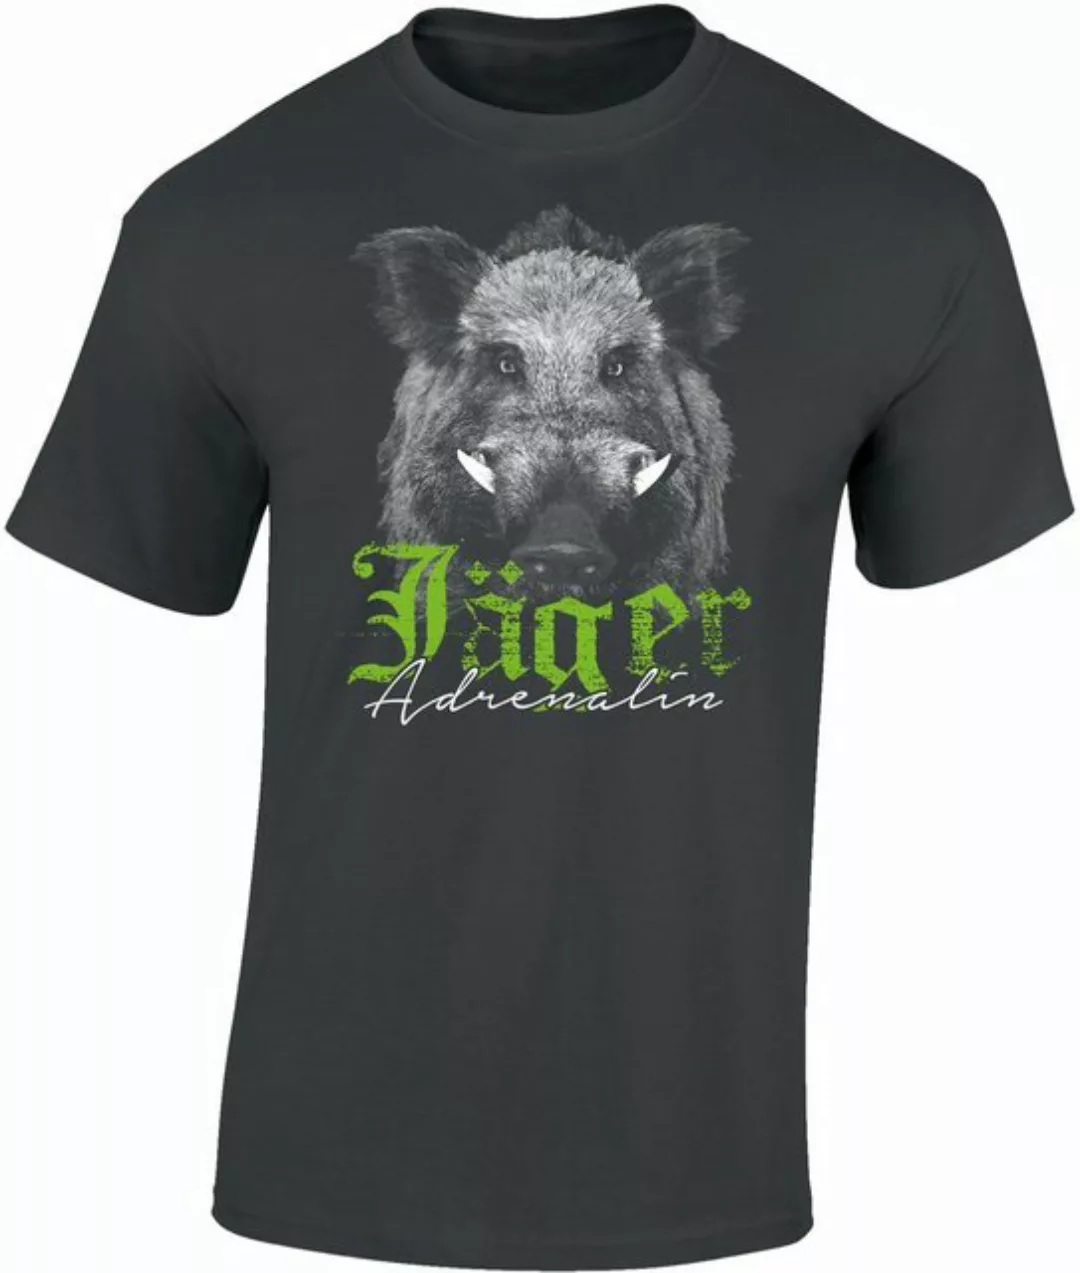 Baddery Print-Shirt Jäger T-Shirt: "Jäger Adrenalin" - Geschenk für Jäger - günstig online kaufen